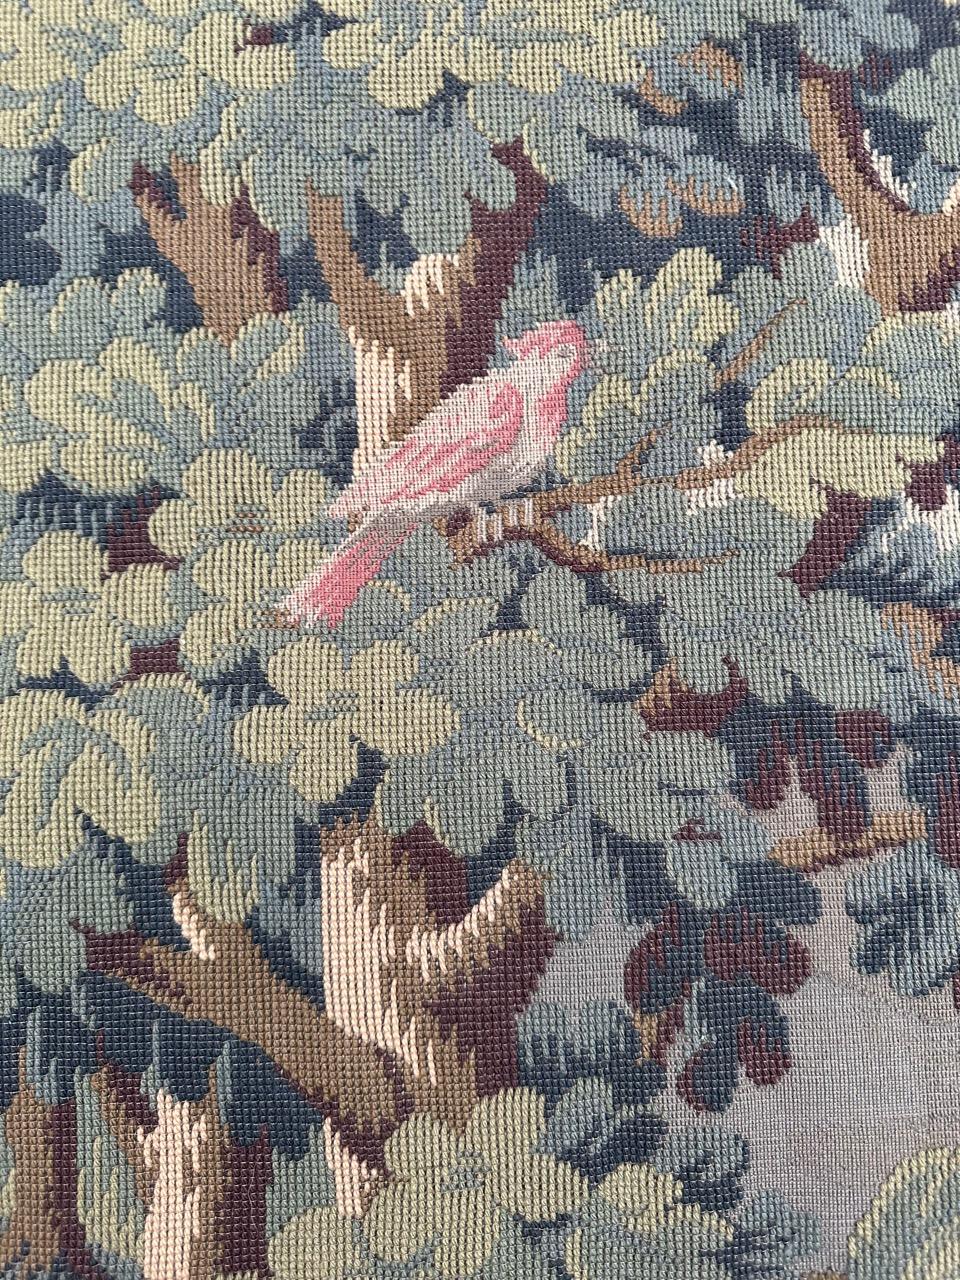 Bobyrug’s Nice French Aubusson Style Jaquar Tapestry Design « La Filandière » For Sale 5